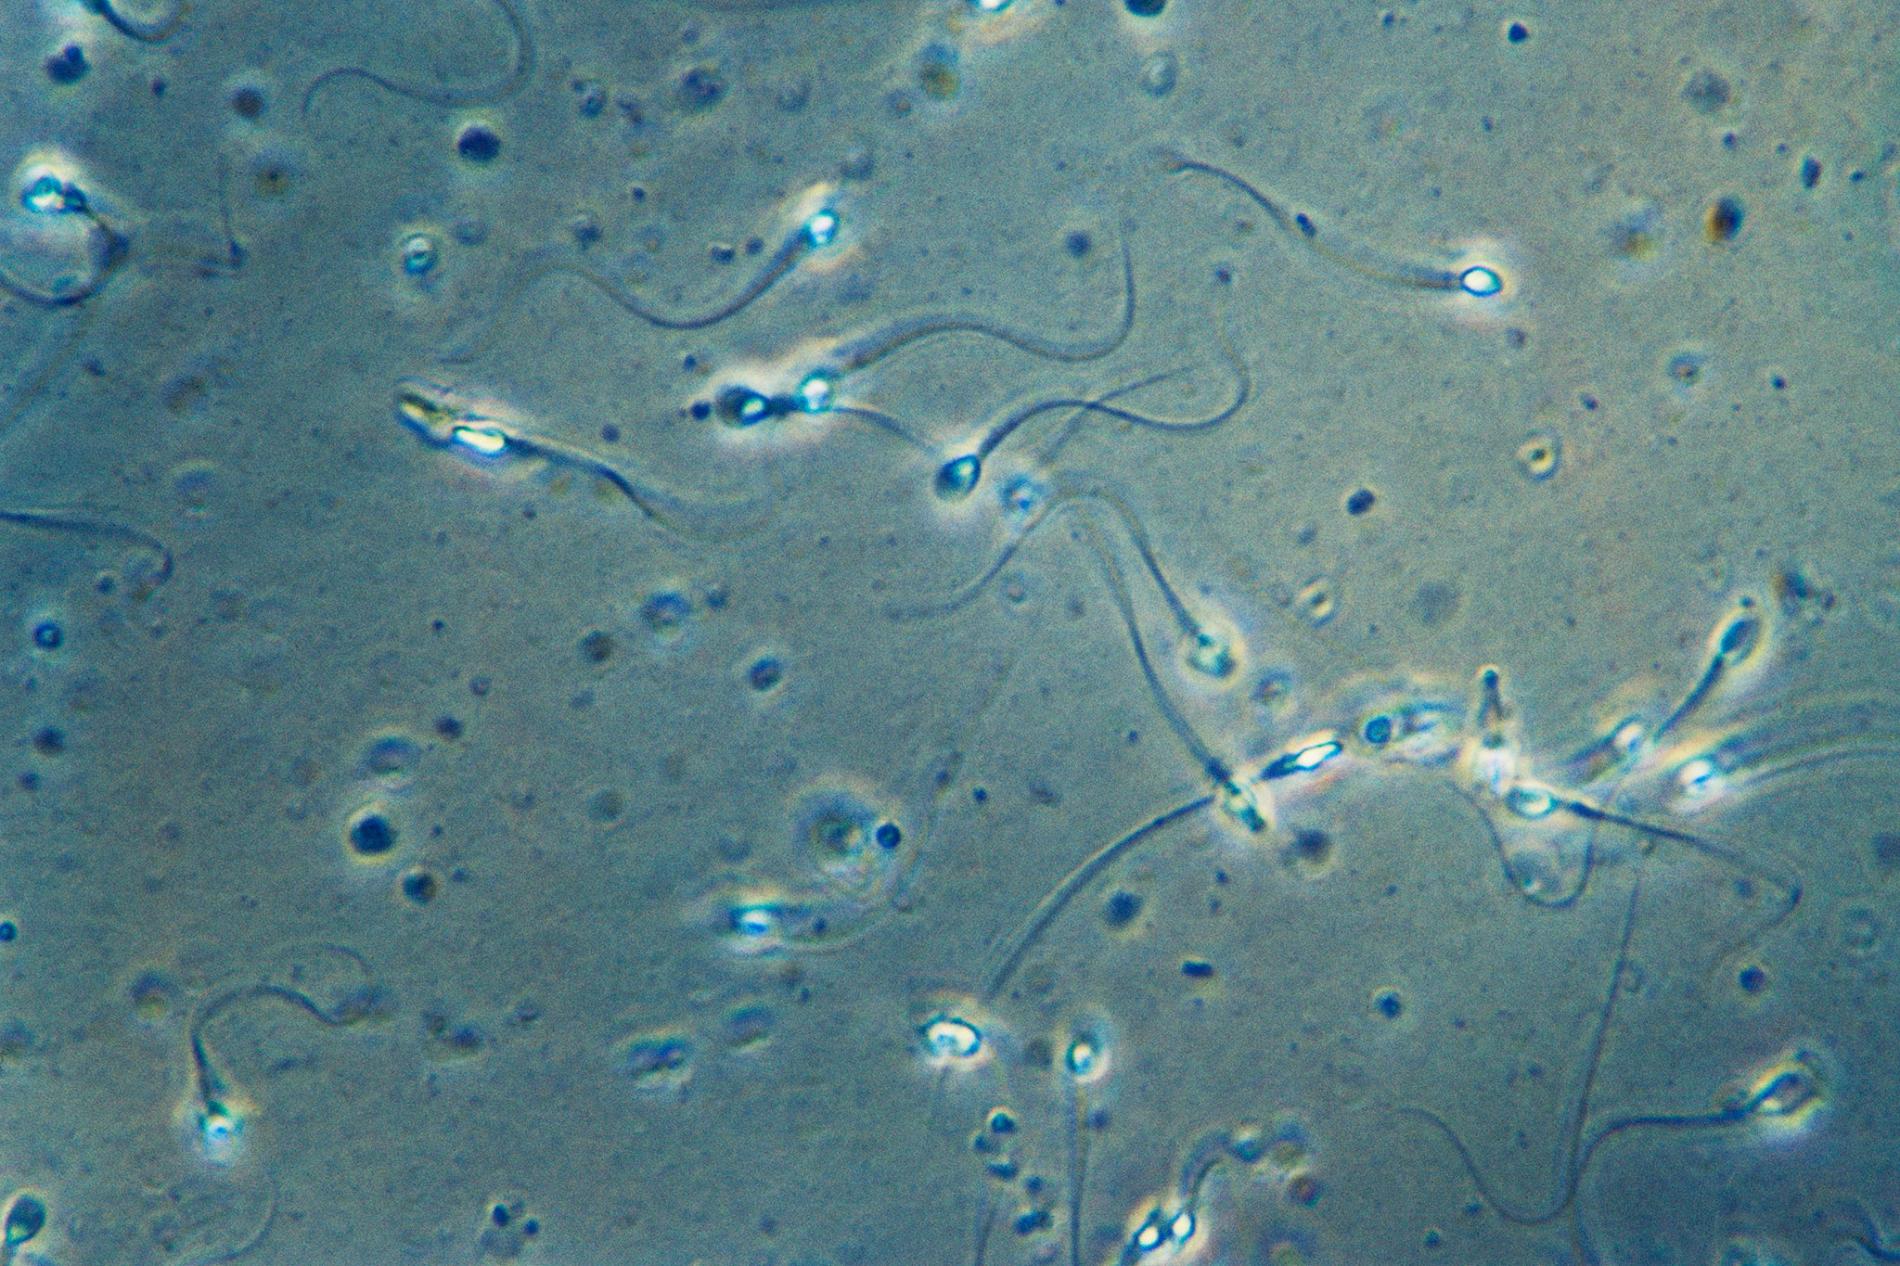 3d Illustration of a Damaged White Sperm Cells Stock Illustration ...